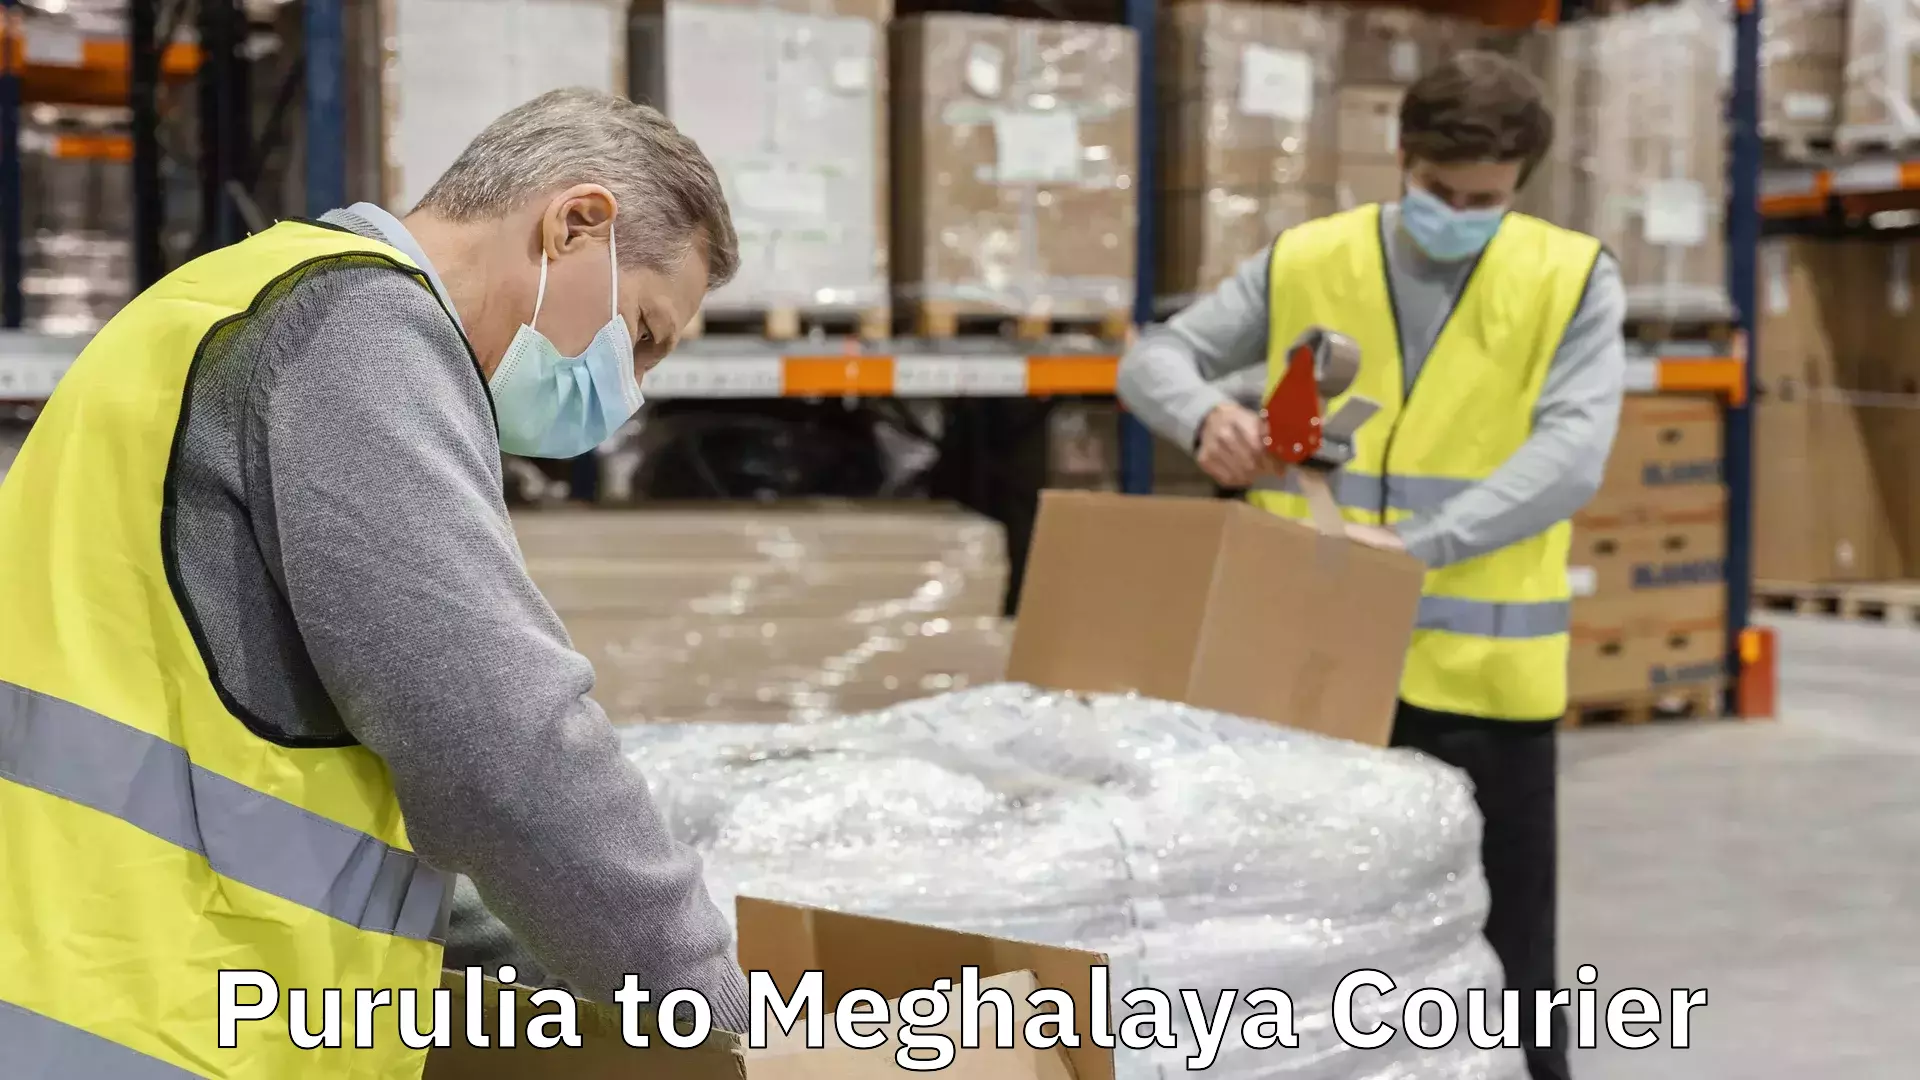 Courier service partnerships Purulia to Meghalaya